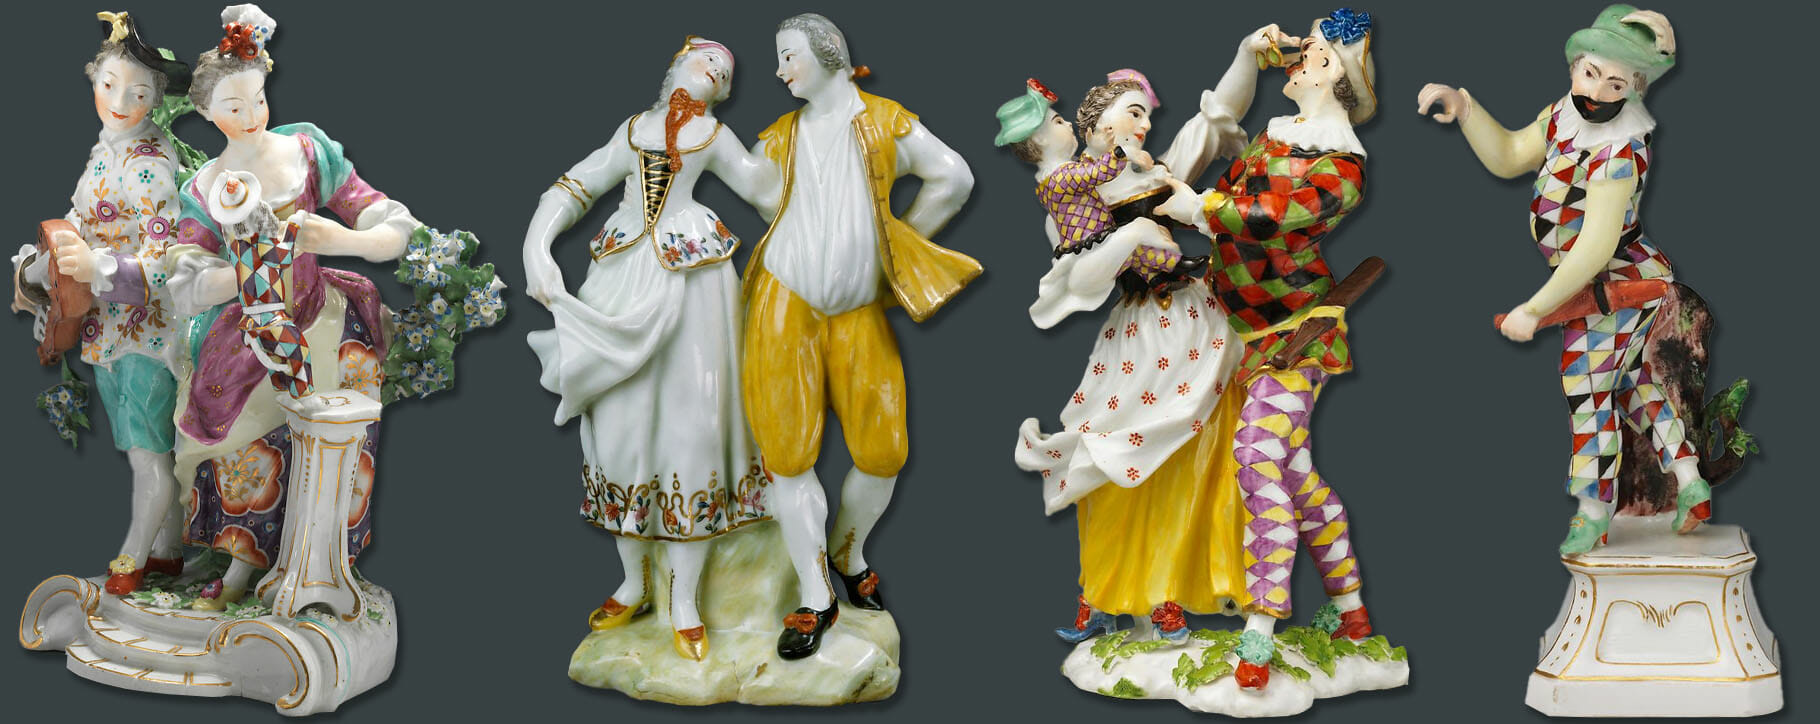 Harlequin figurines